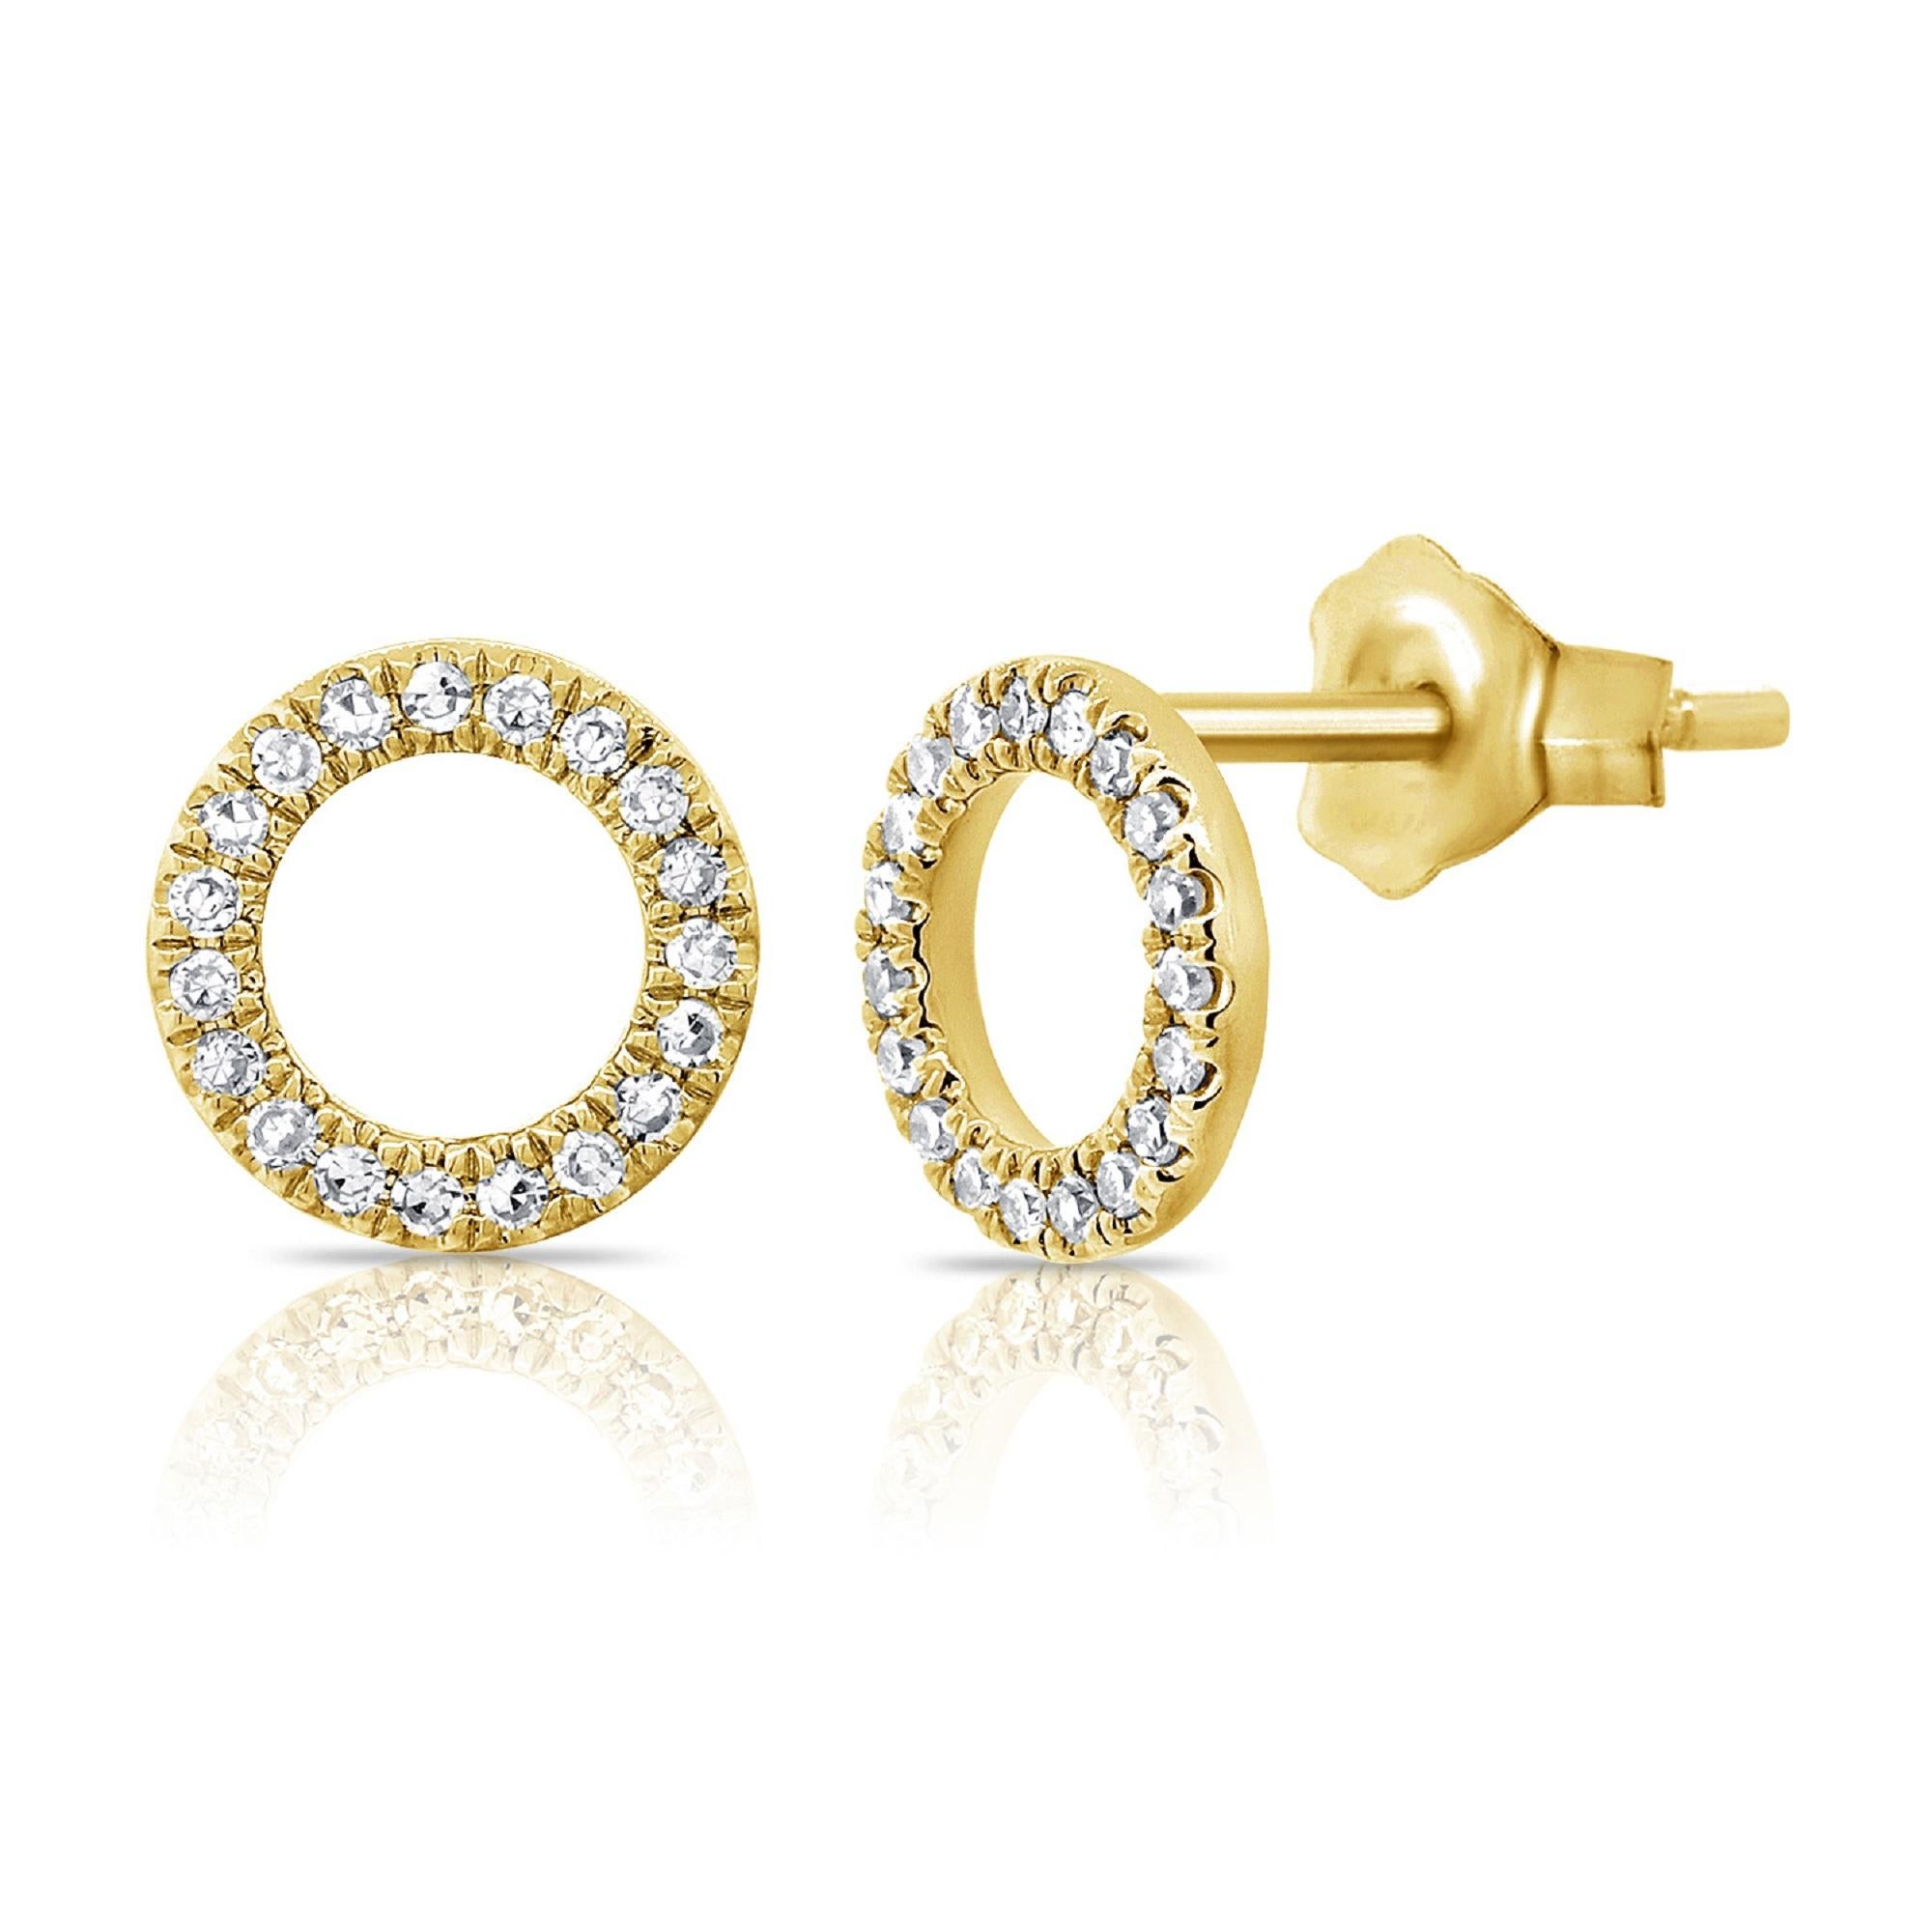 gold earrings design in round shape